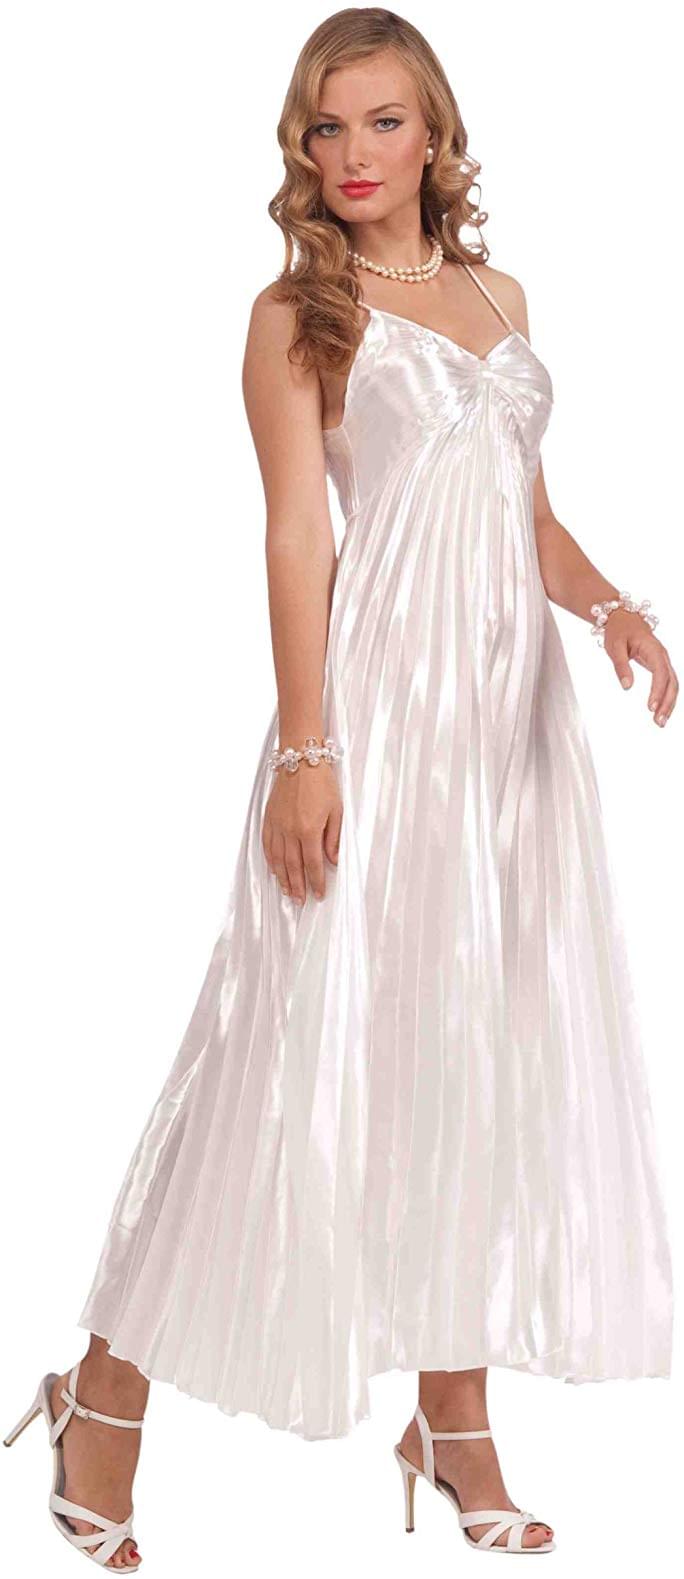 Vintage Hollywood Starlet Silky White Adult Costume Dress